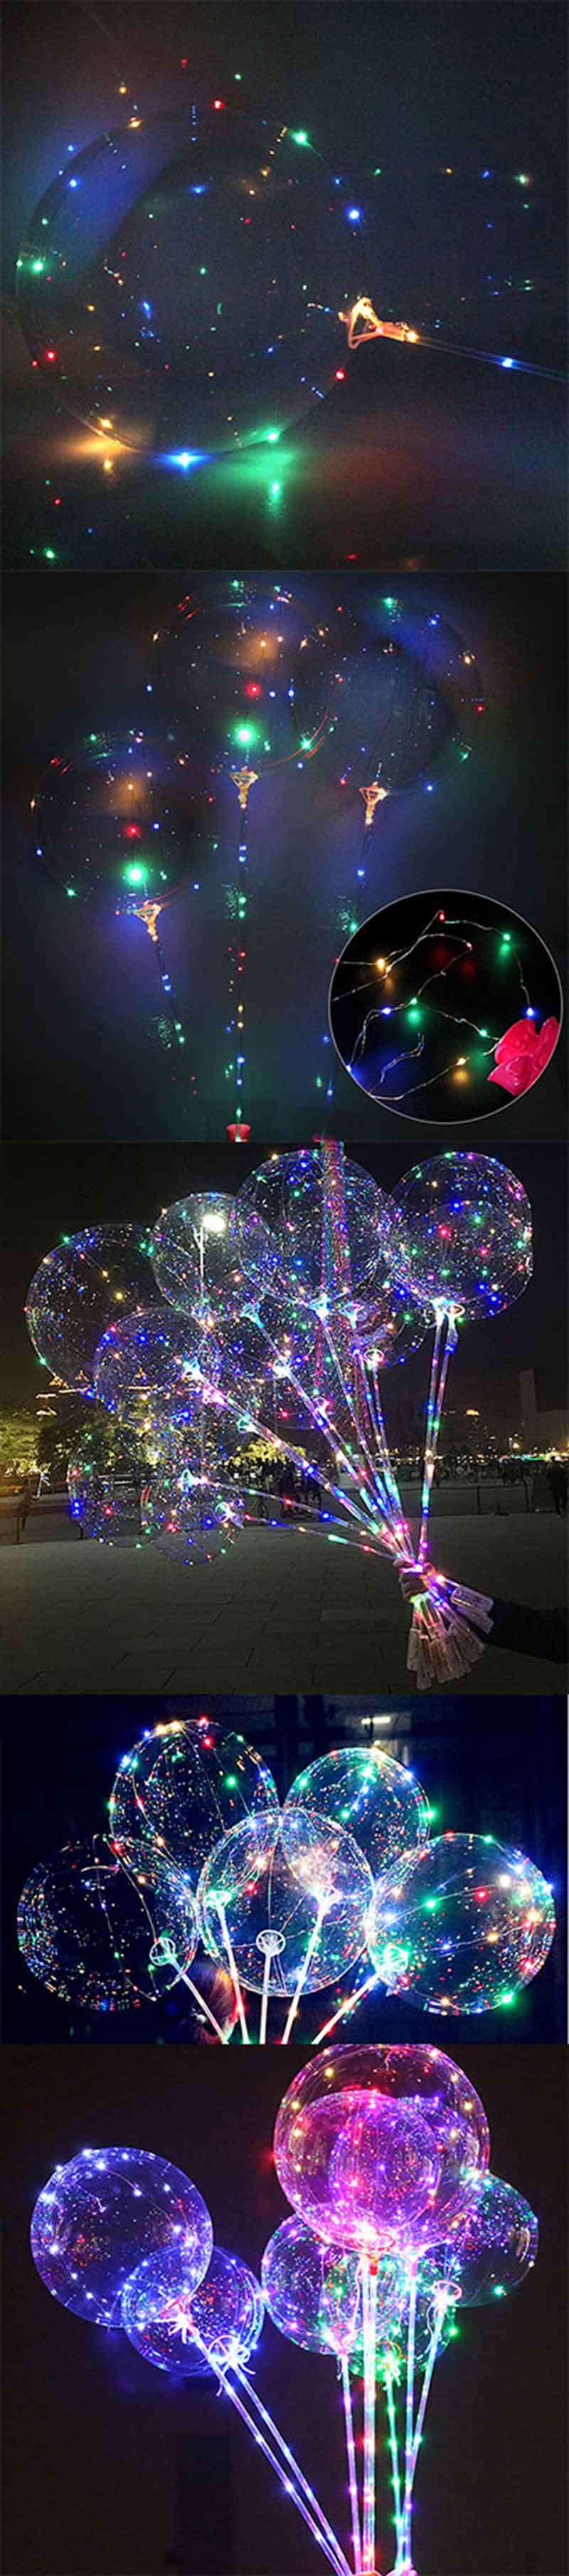 Bobo balloon 24 Inches LED Balloon with String Light